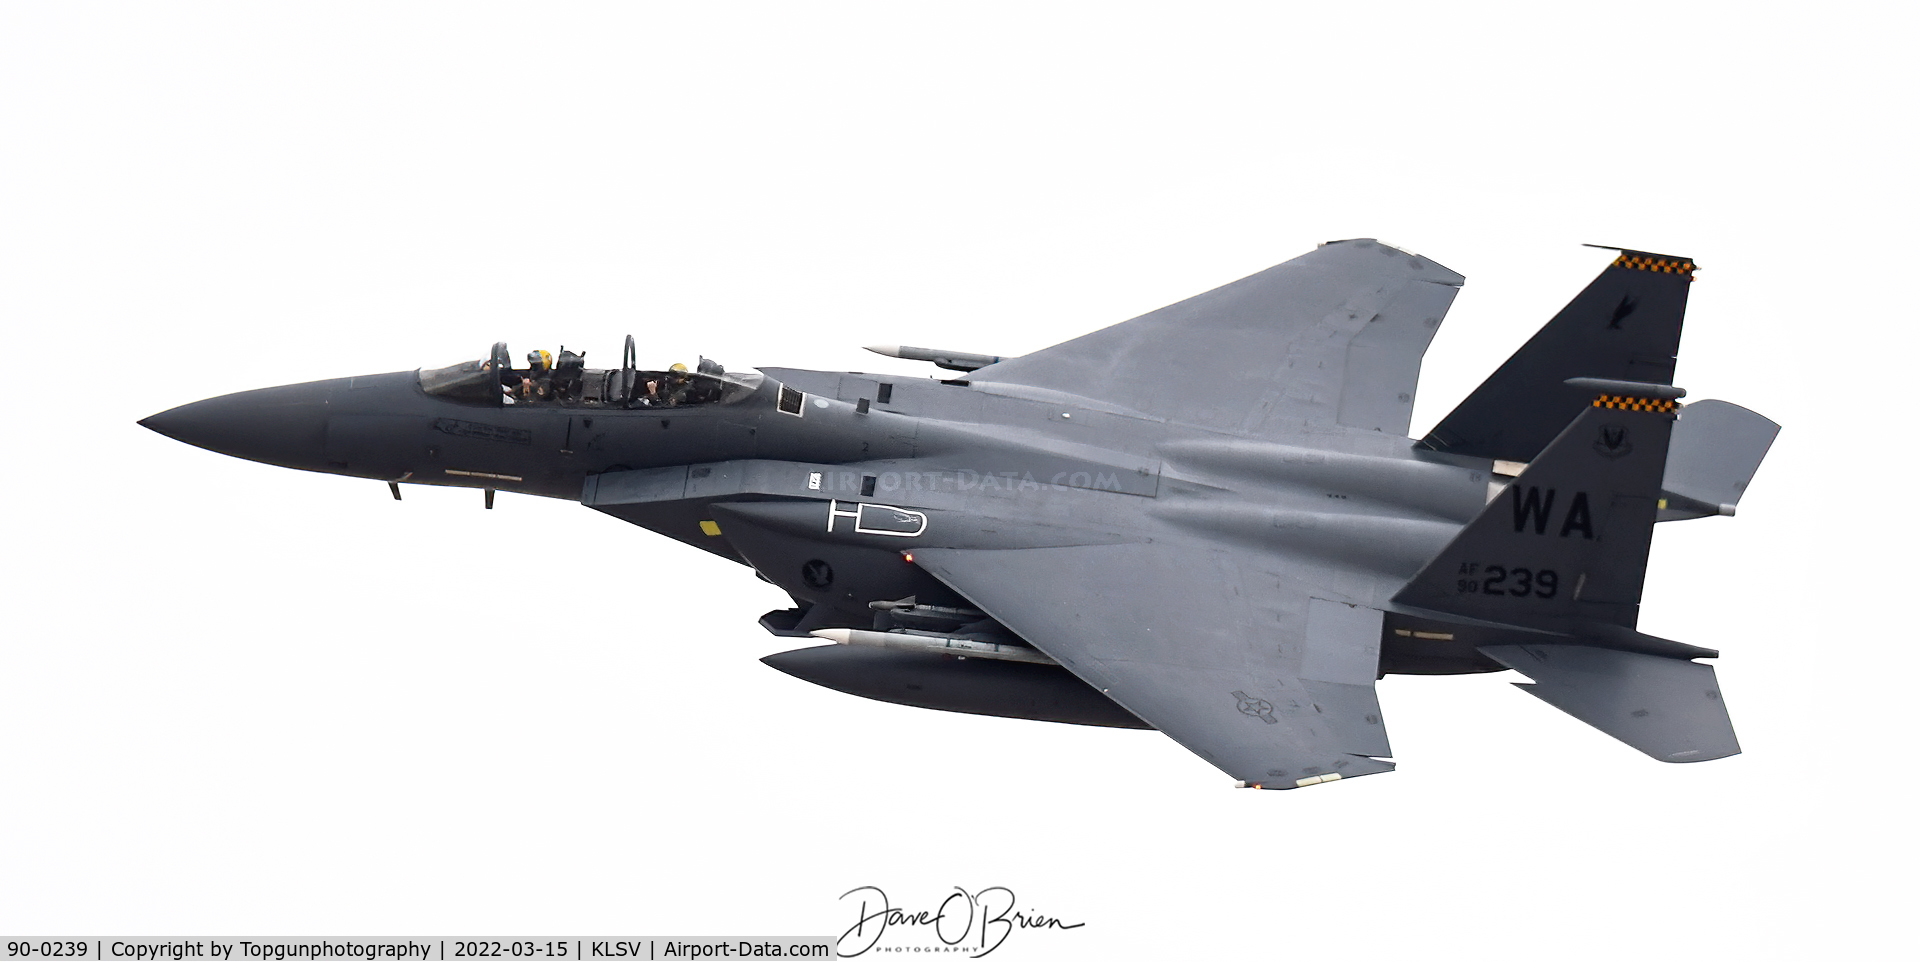 90-0239, 1990 McDonnell Douglas F-15E Strike Eagle C/N 1171/E141, HOSS01 
17th WPS